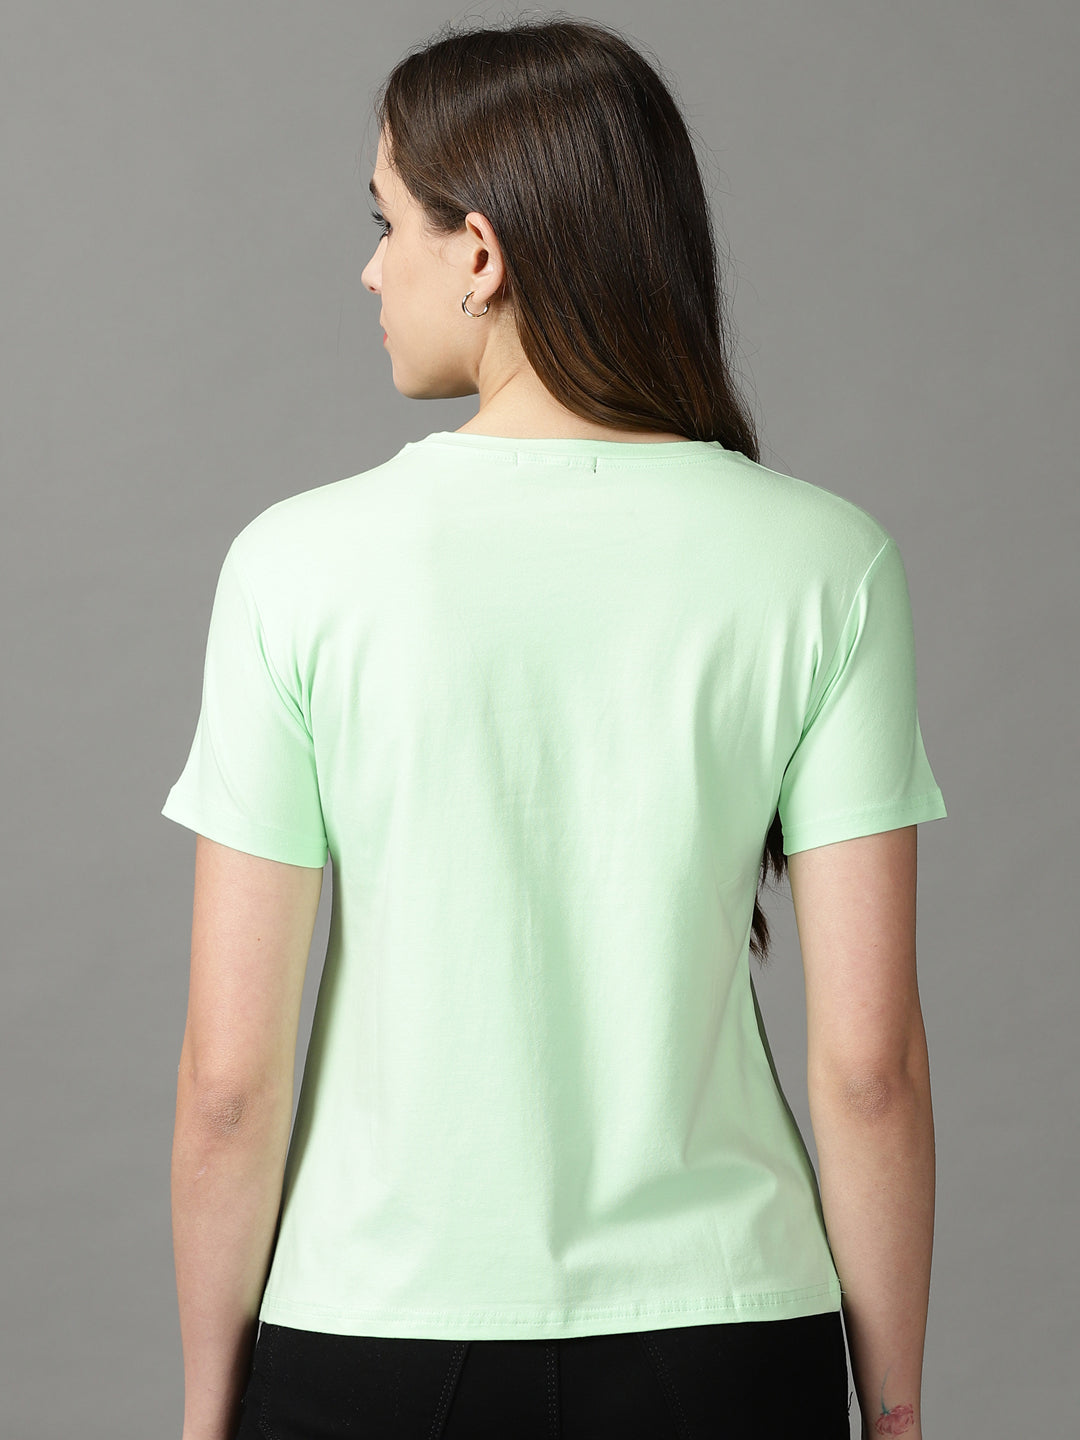 Women's Fluorescent Green Solid Top